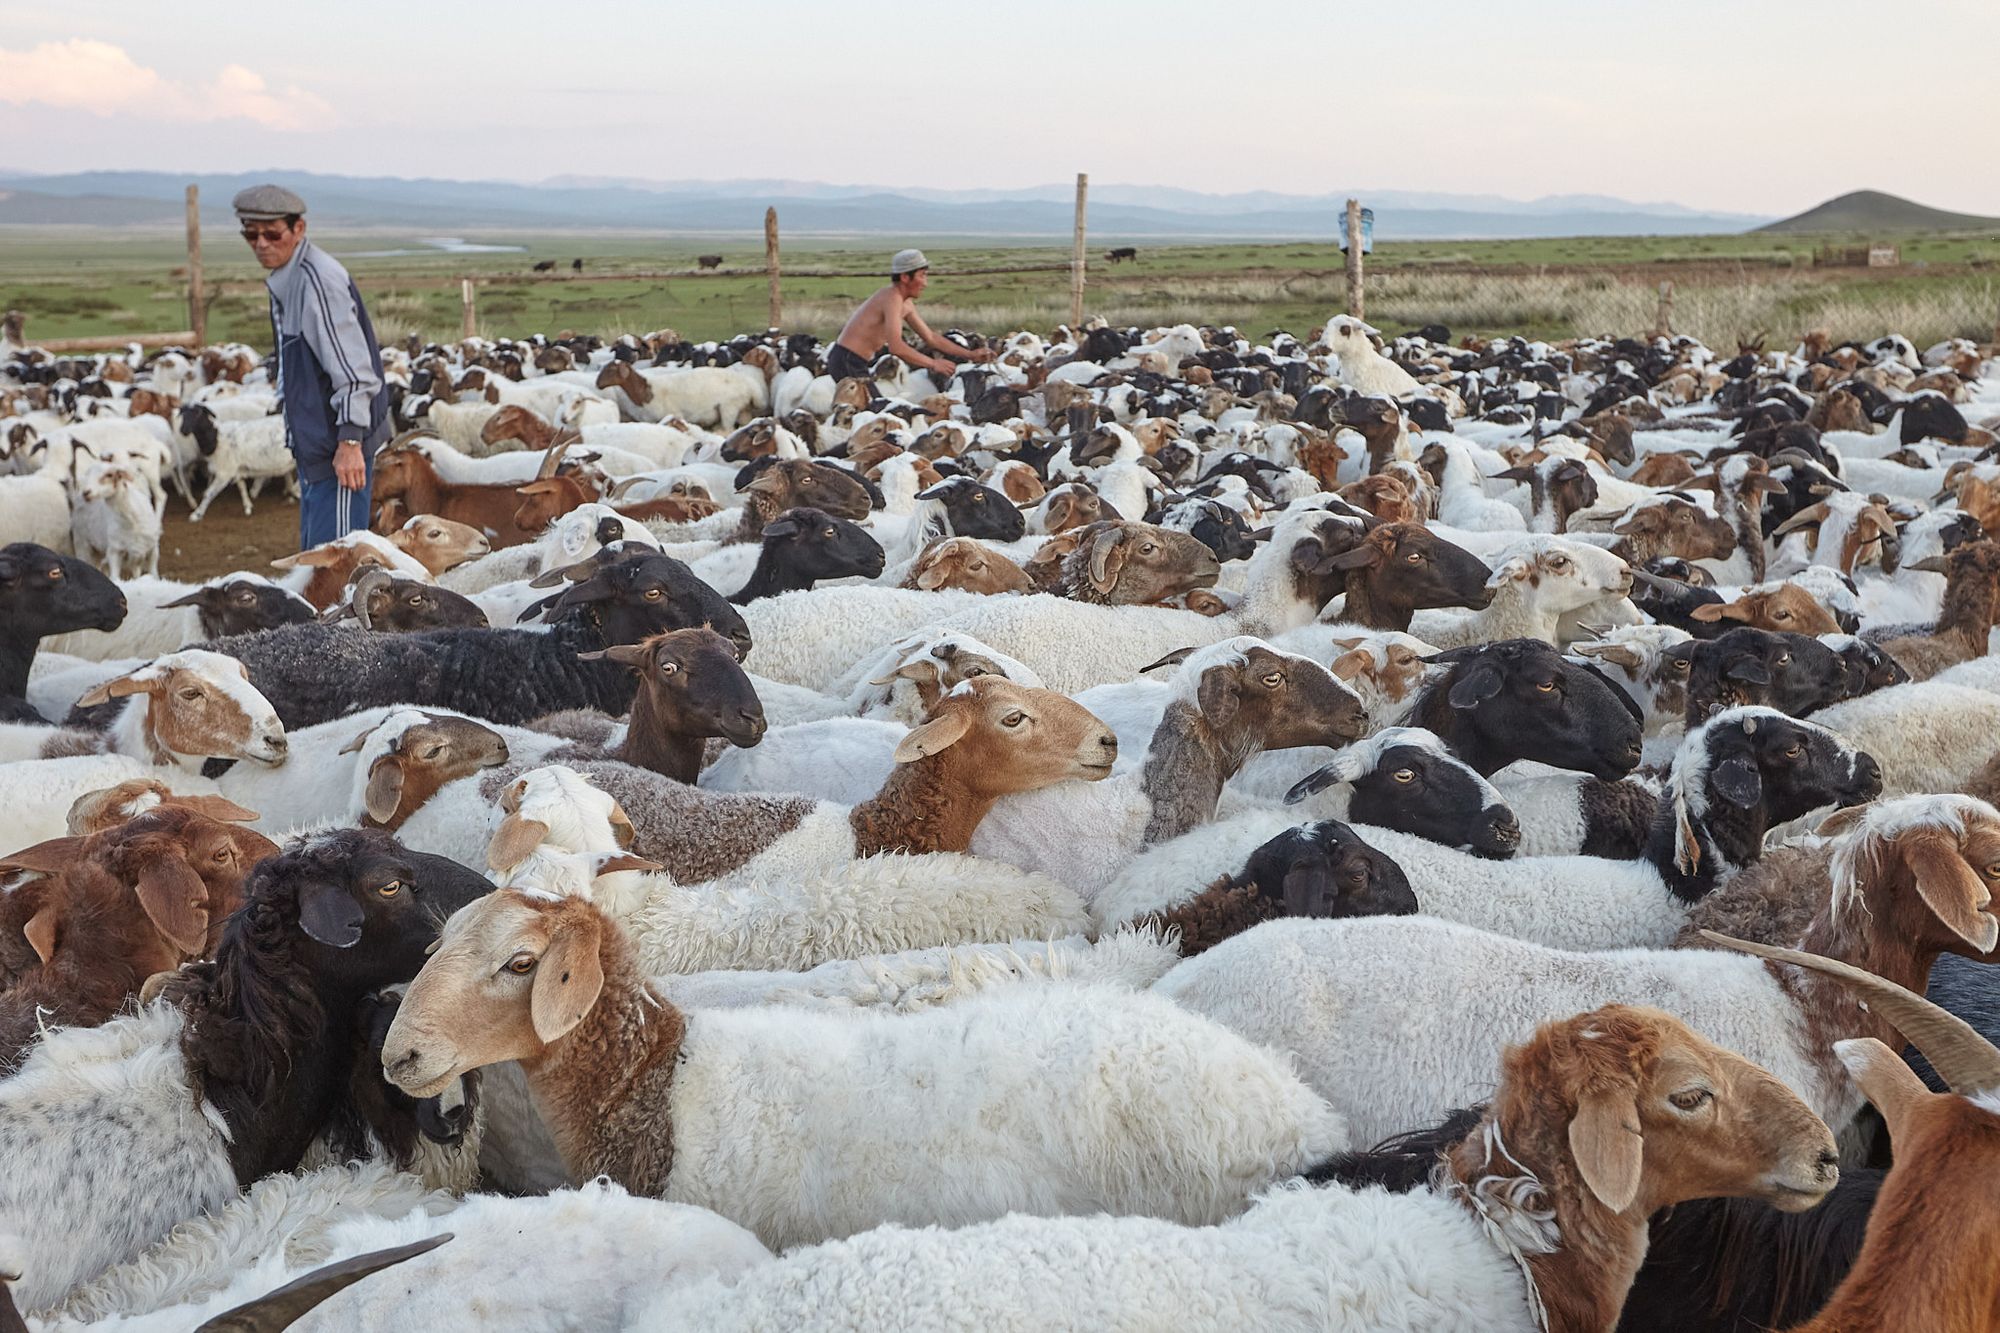 The pastoralists in the Gobi Desert, Mongolia